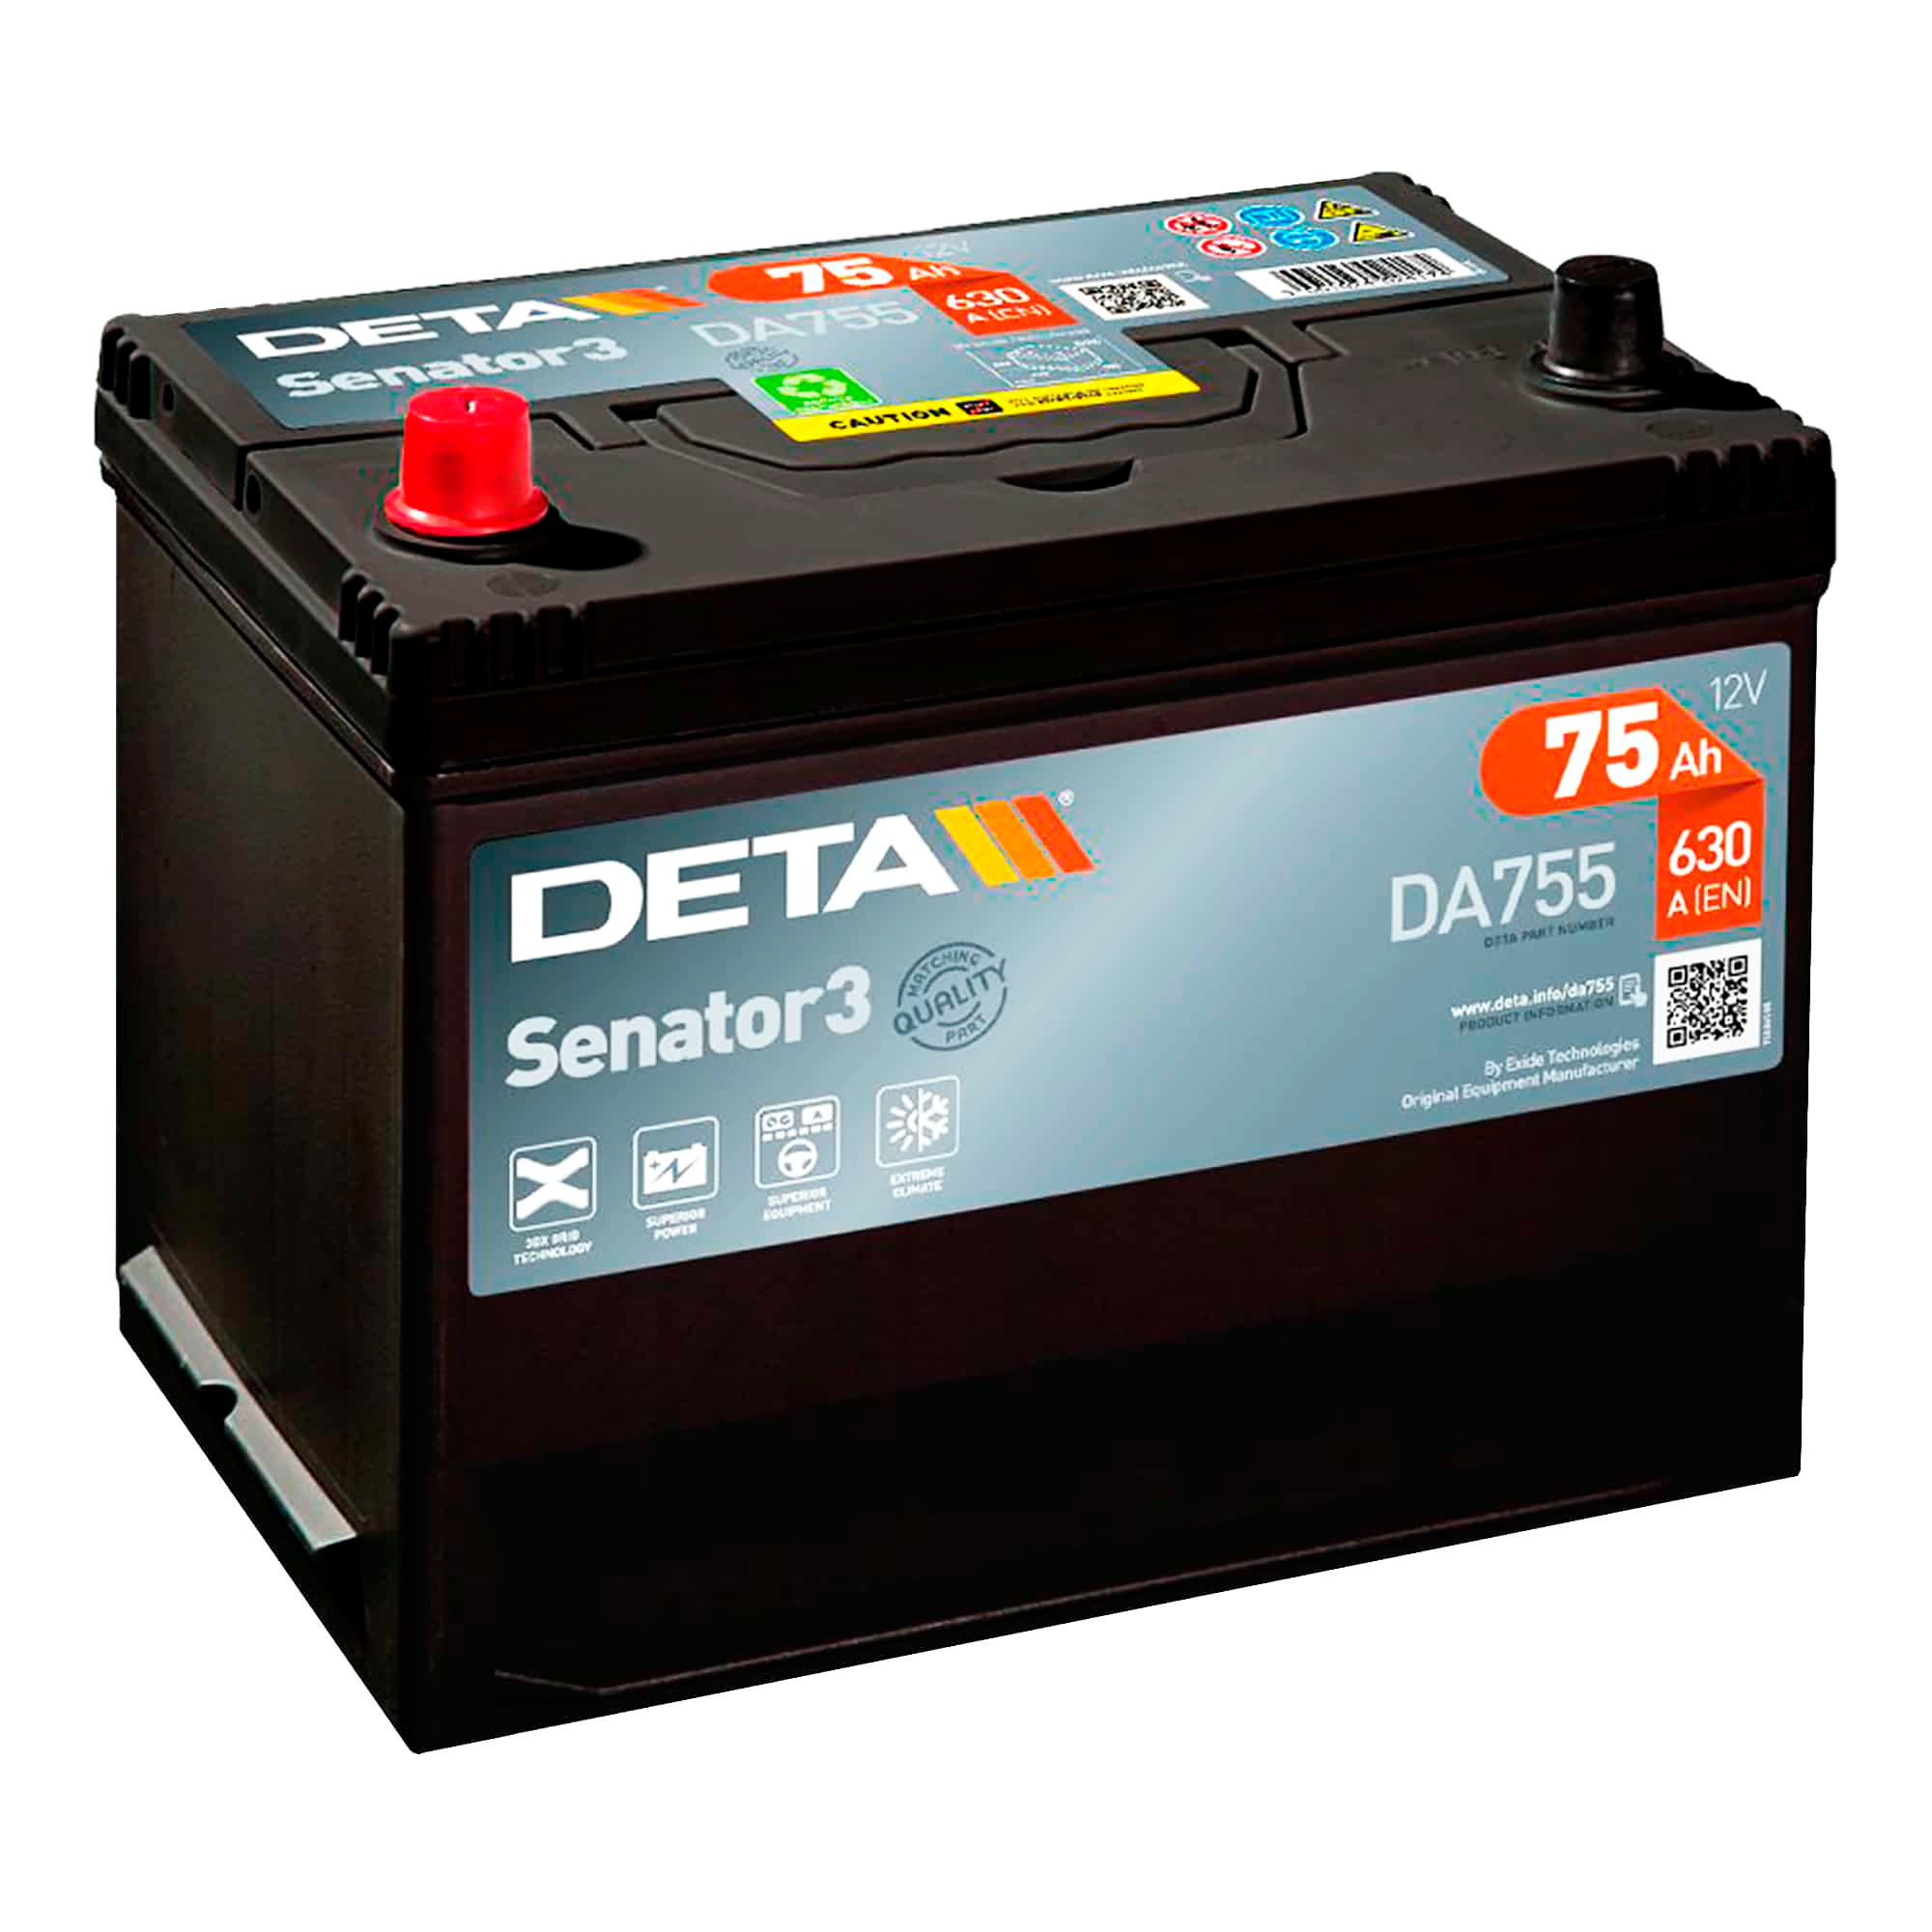 Аккумулятор DETA Senator 3 6CT-75Ah (+/-) (DA755)